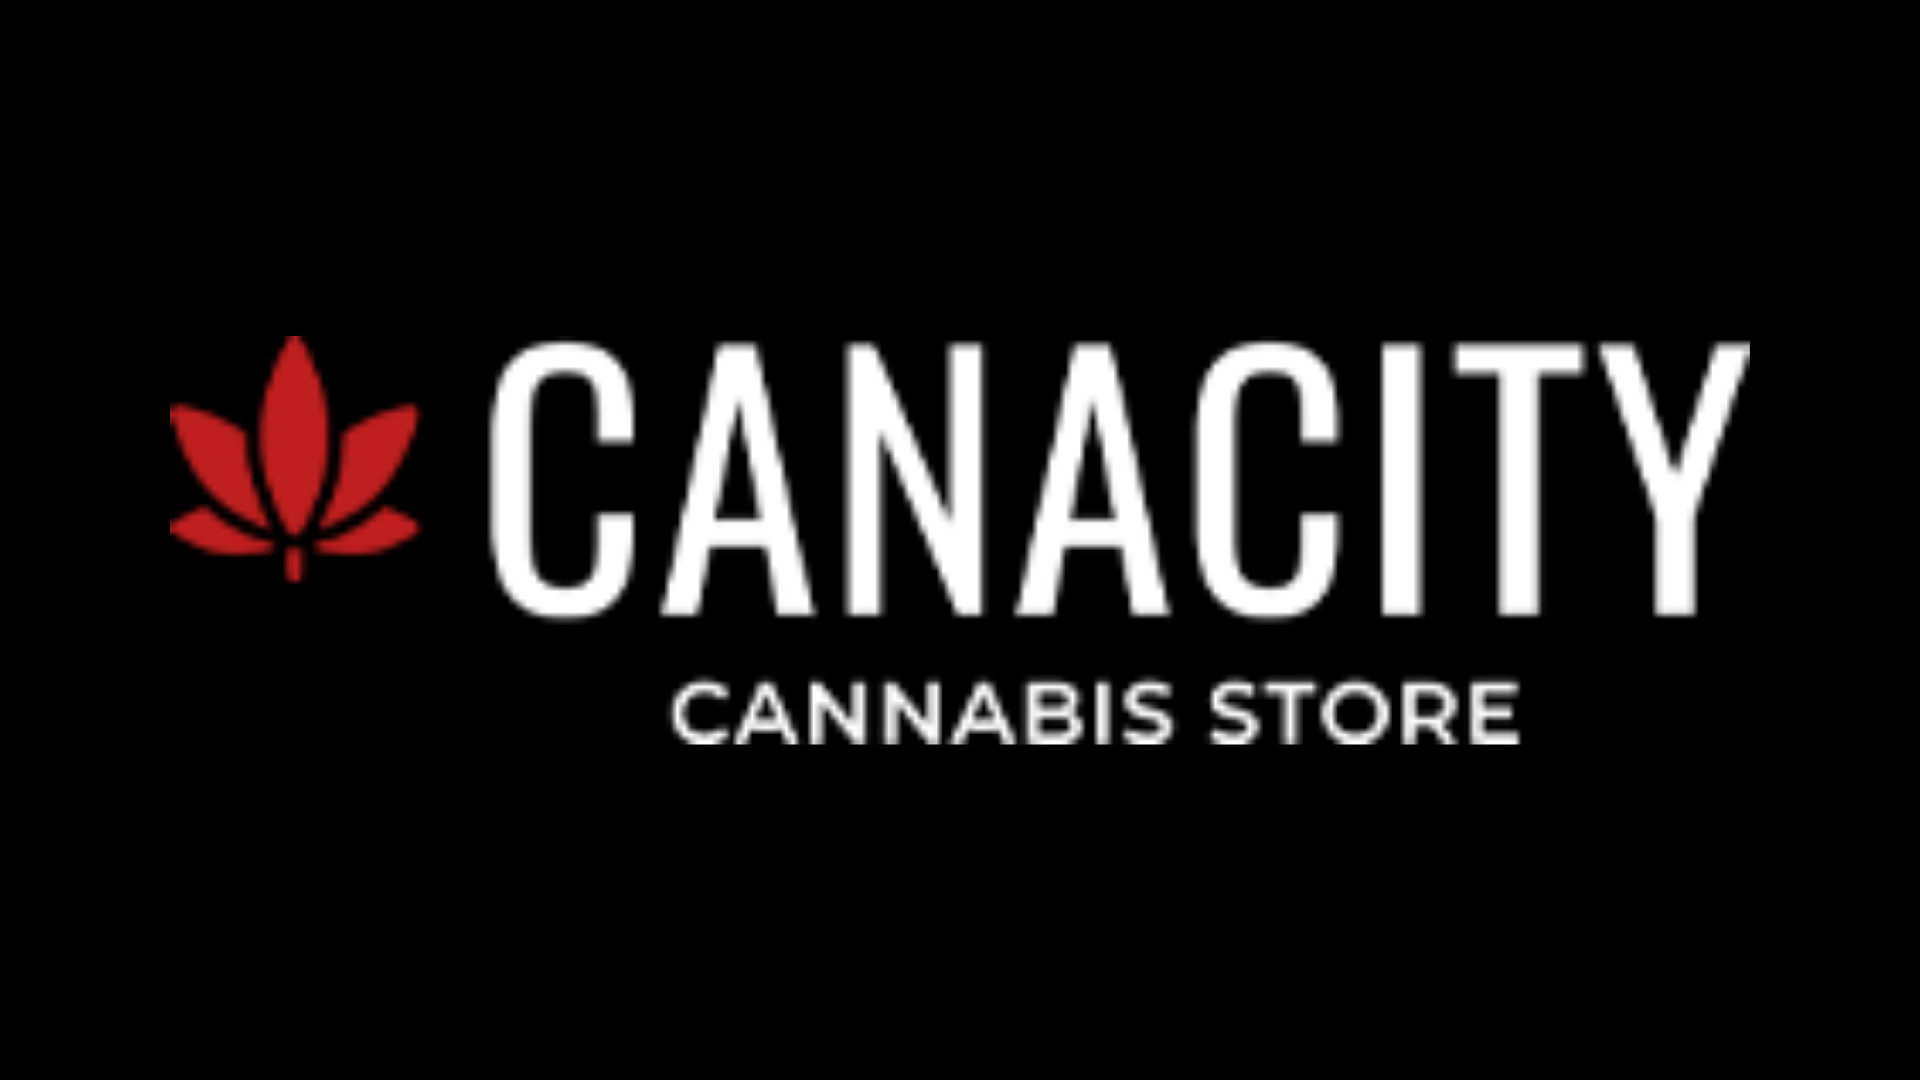 Cannabis Store Canacity Cannabis Store - Winnipeg - 1